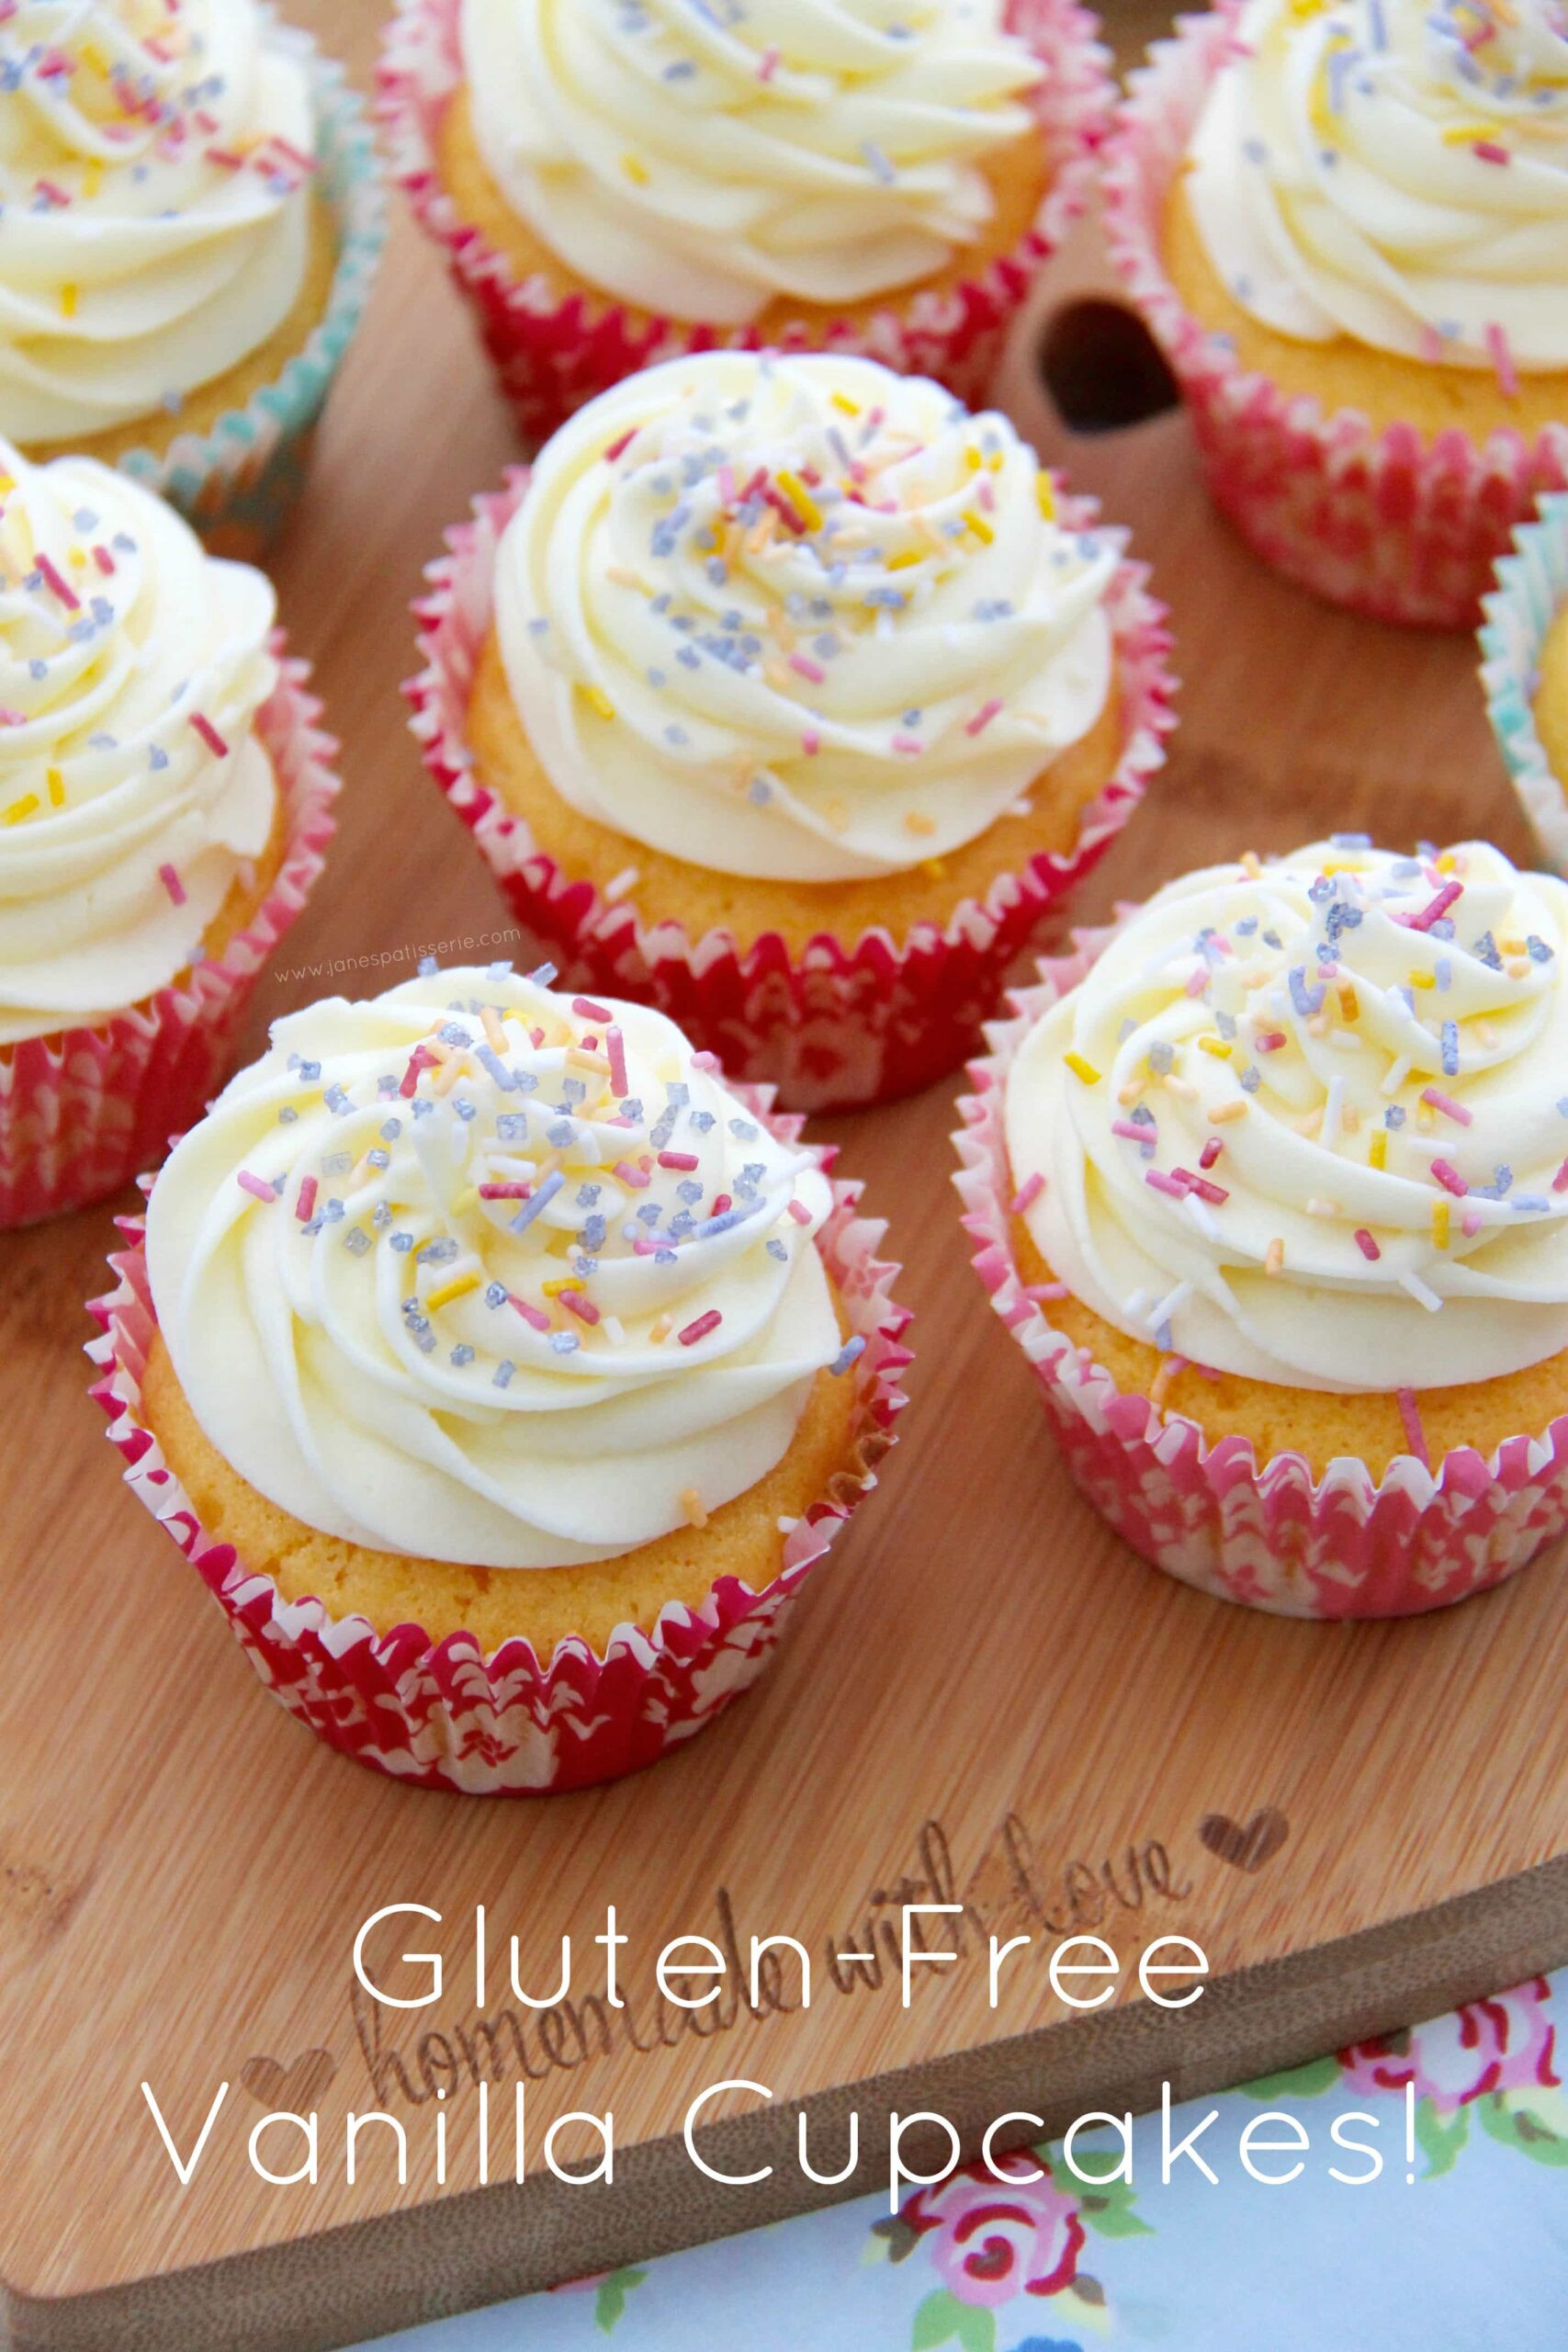 Gluten Free Dairy Free Cupcakes Best Of Gluten Free Vanilla Cupcakes Jane S Patisserie